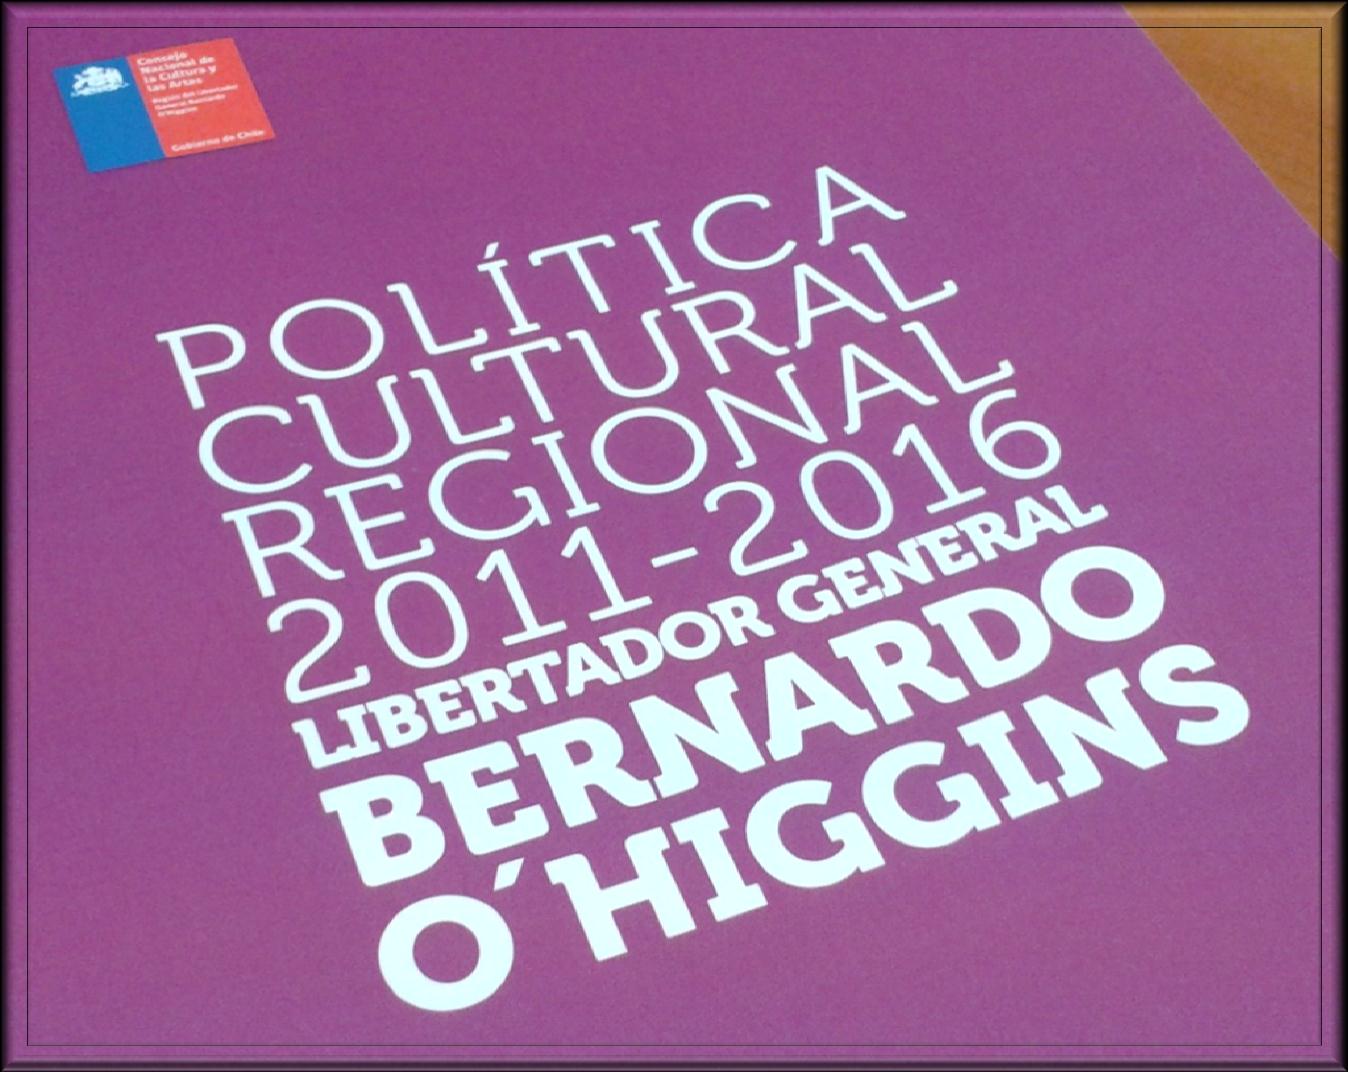 Política Cultural 2011-2016 Cuenta Pública 2012